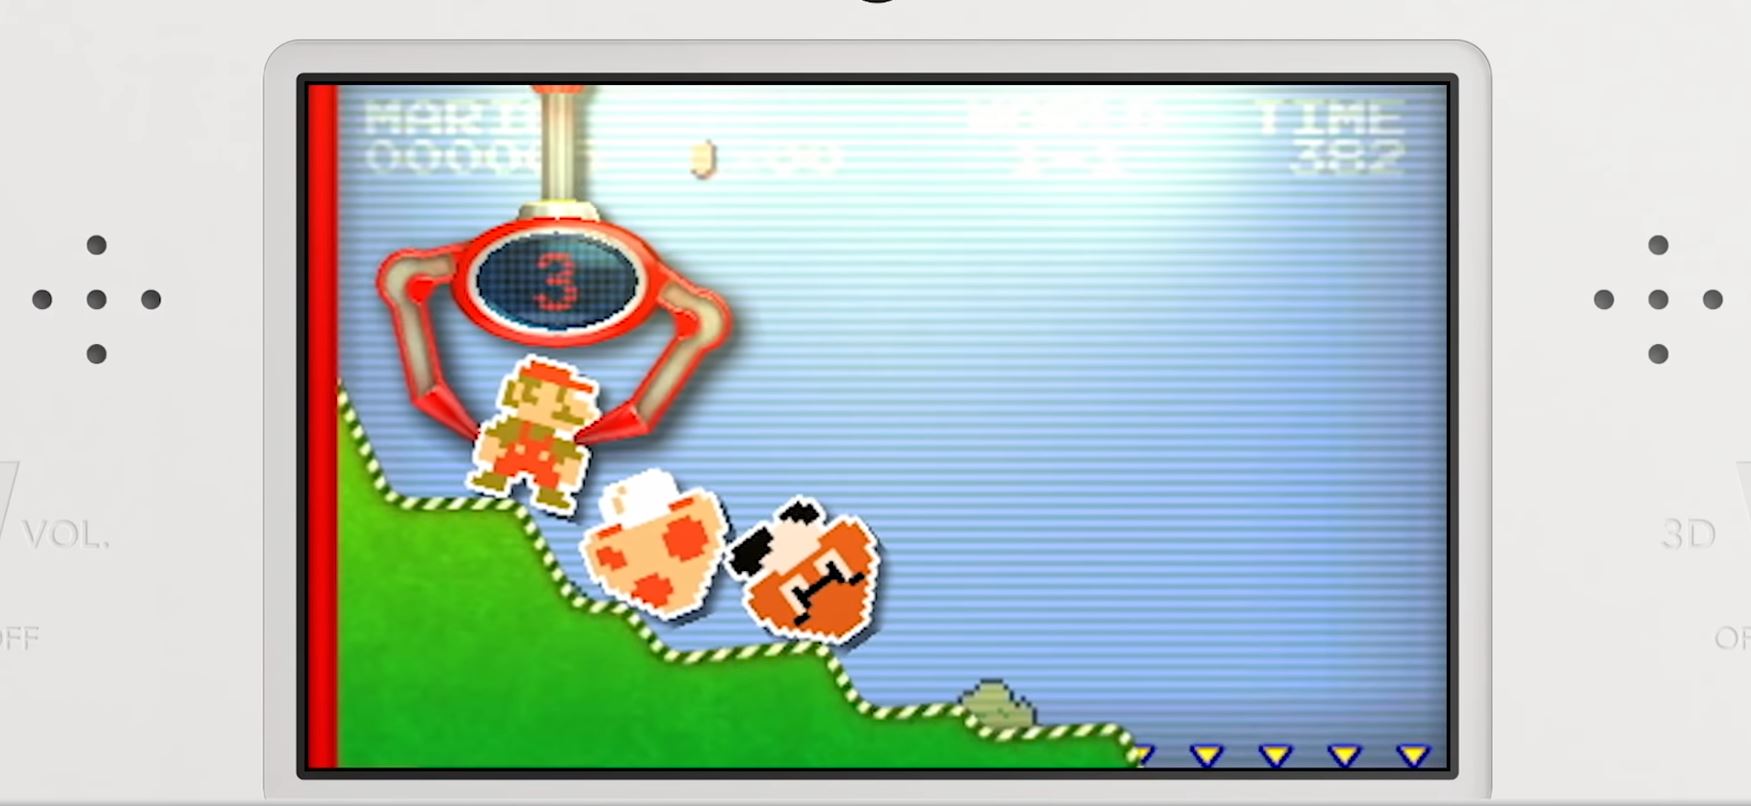 Pokémon Ultra Sun Nintendo 3ds Digital Eshop Codigo Download